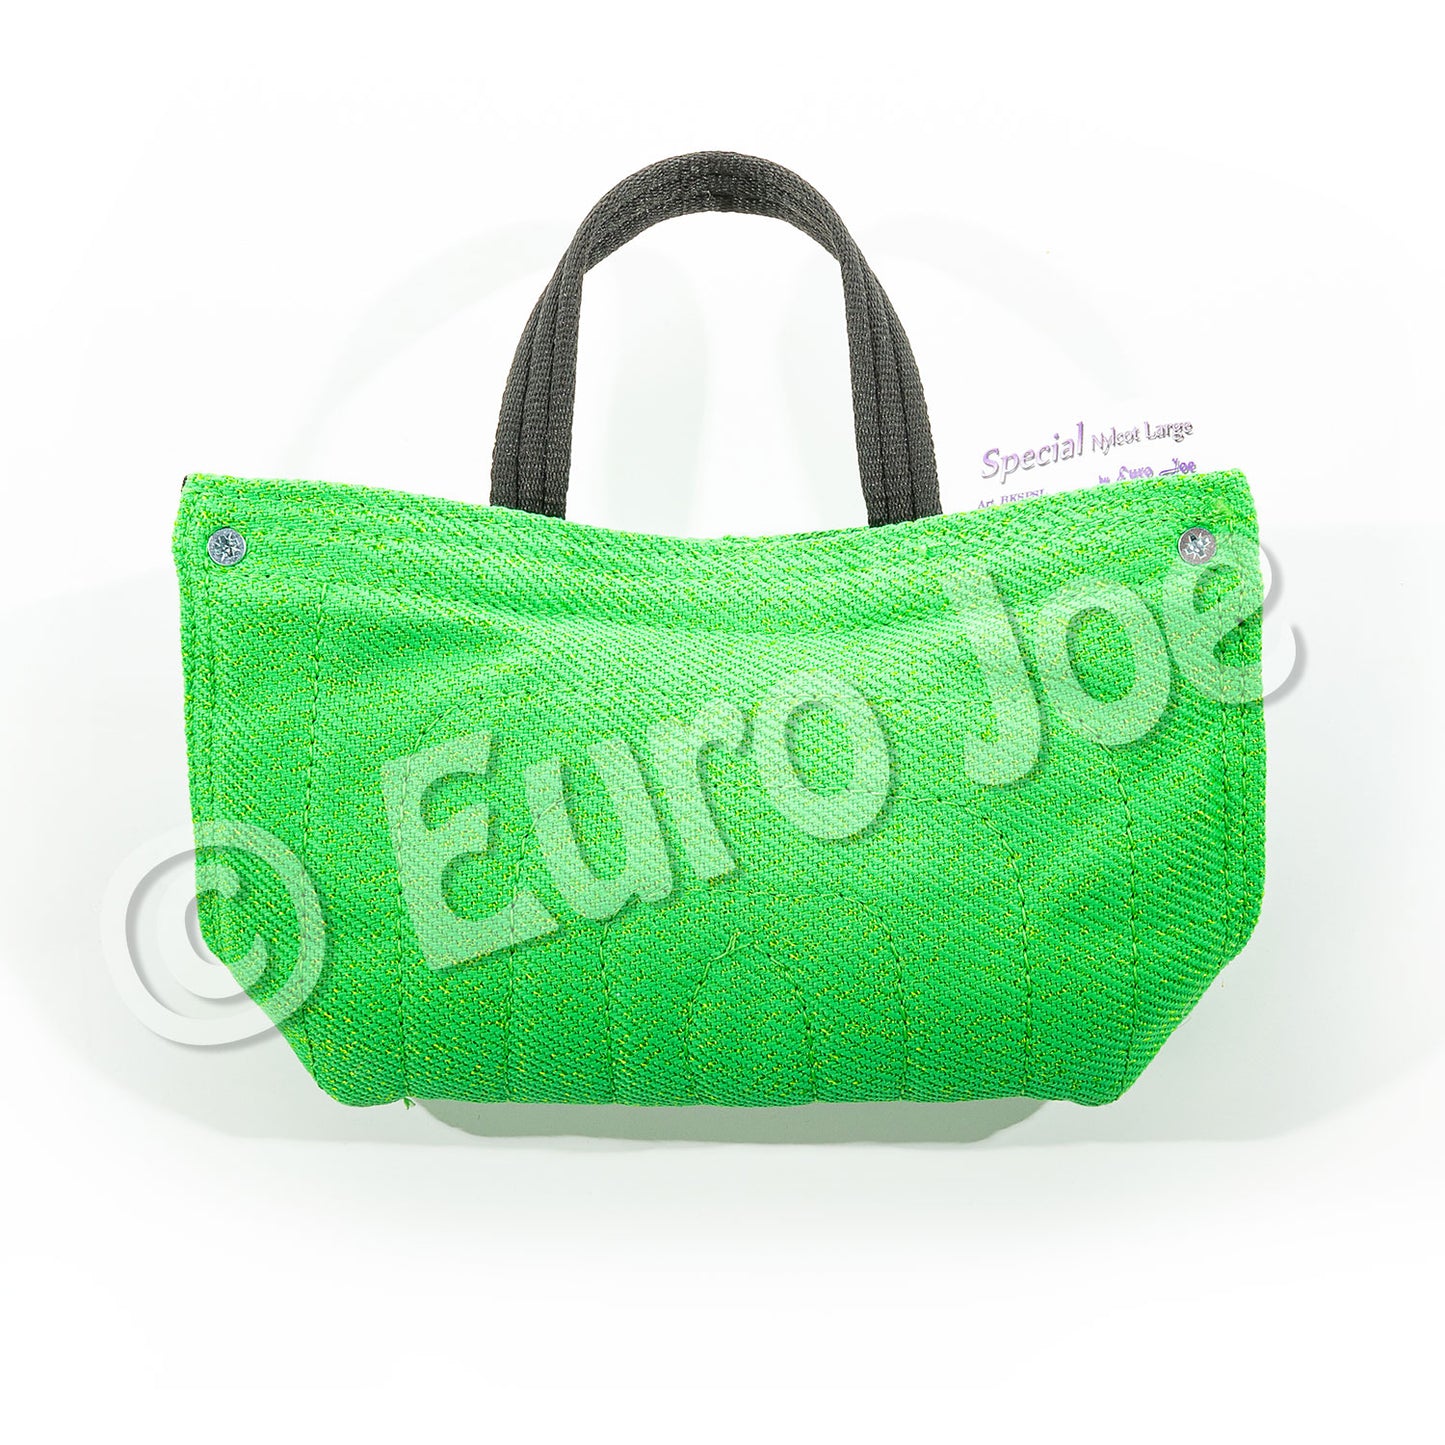 Euro Joe Dog Bite Cushion Wedge, Jute & Nylcot